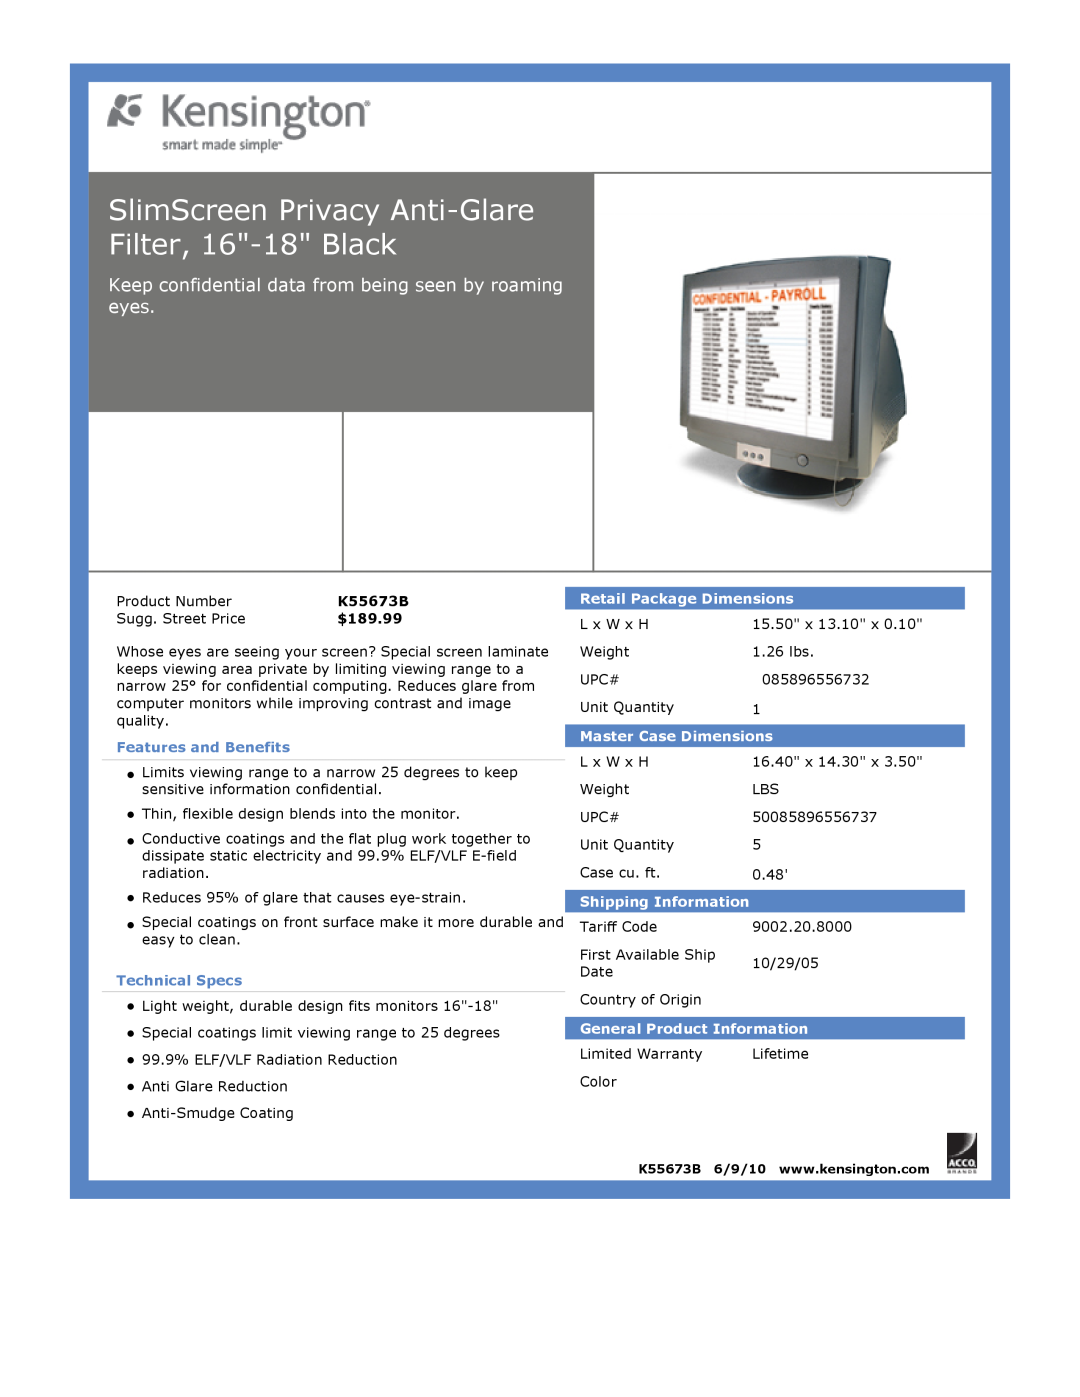 Kensington EU64325 SlimScreen Privacy Anti-GlareFilter, 16-18Black, $189.99, Features and Benefits, Technical Specs 